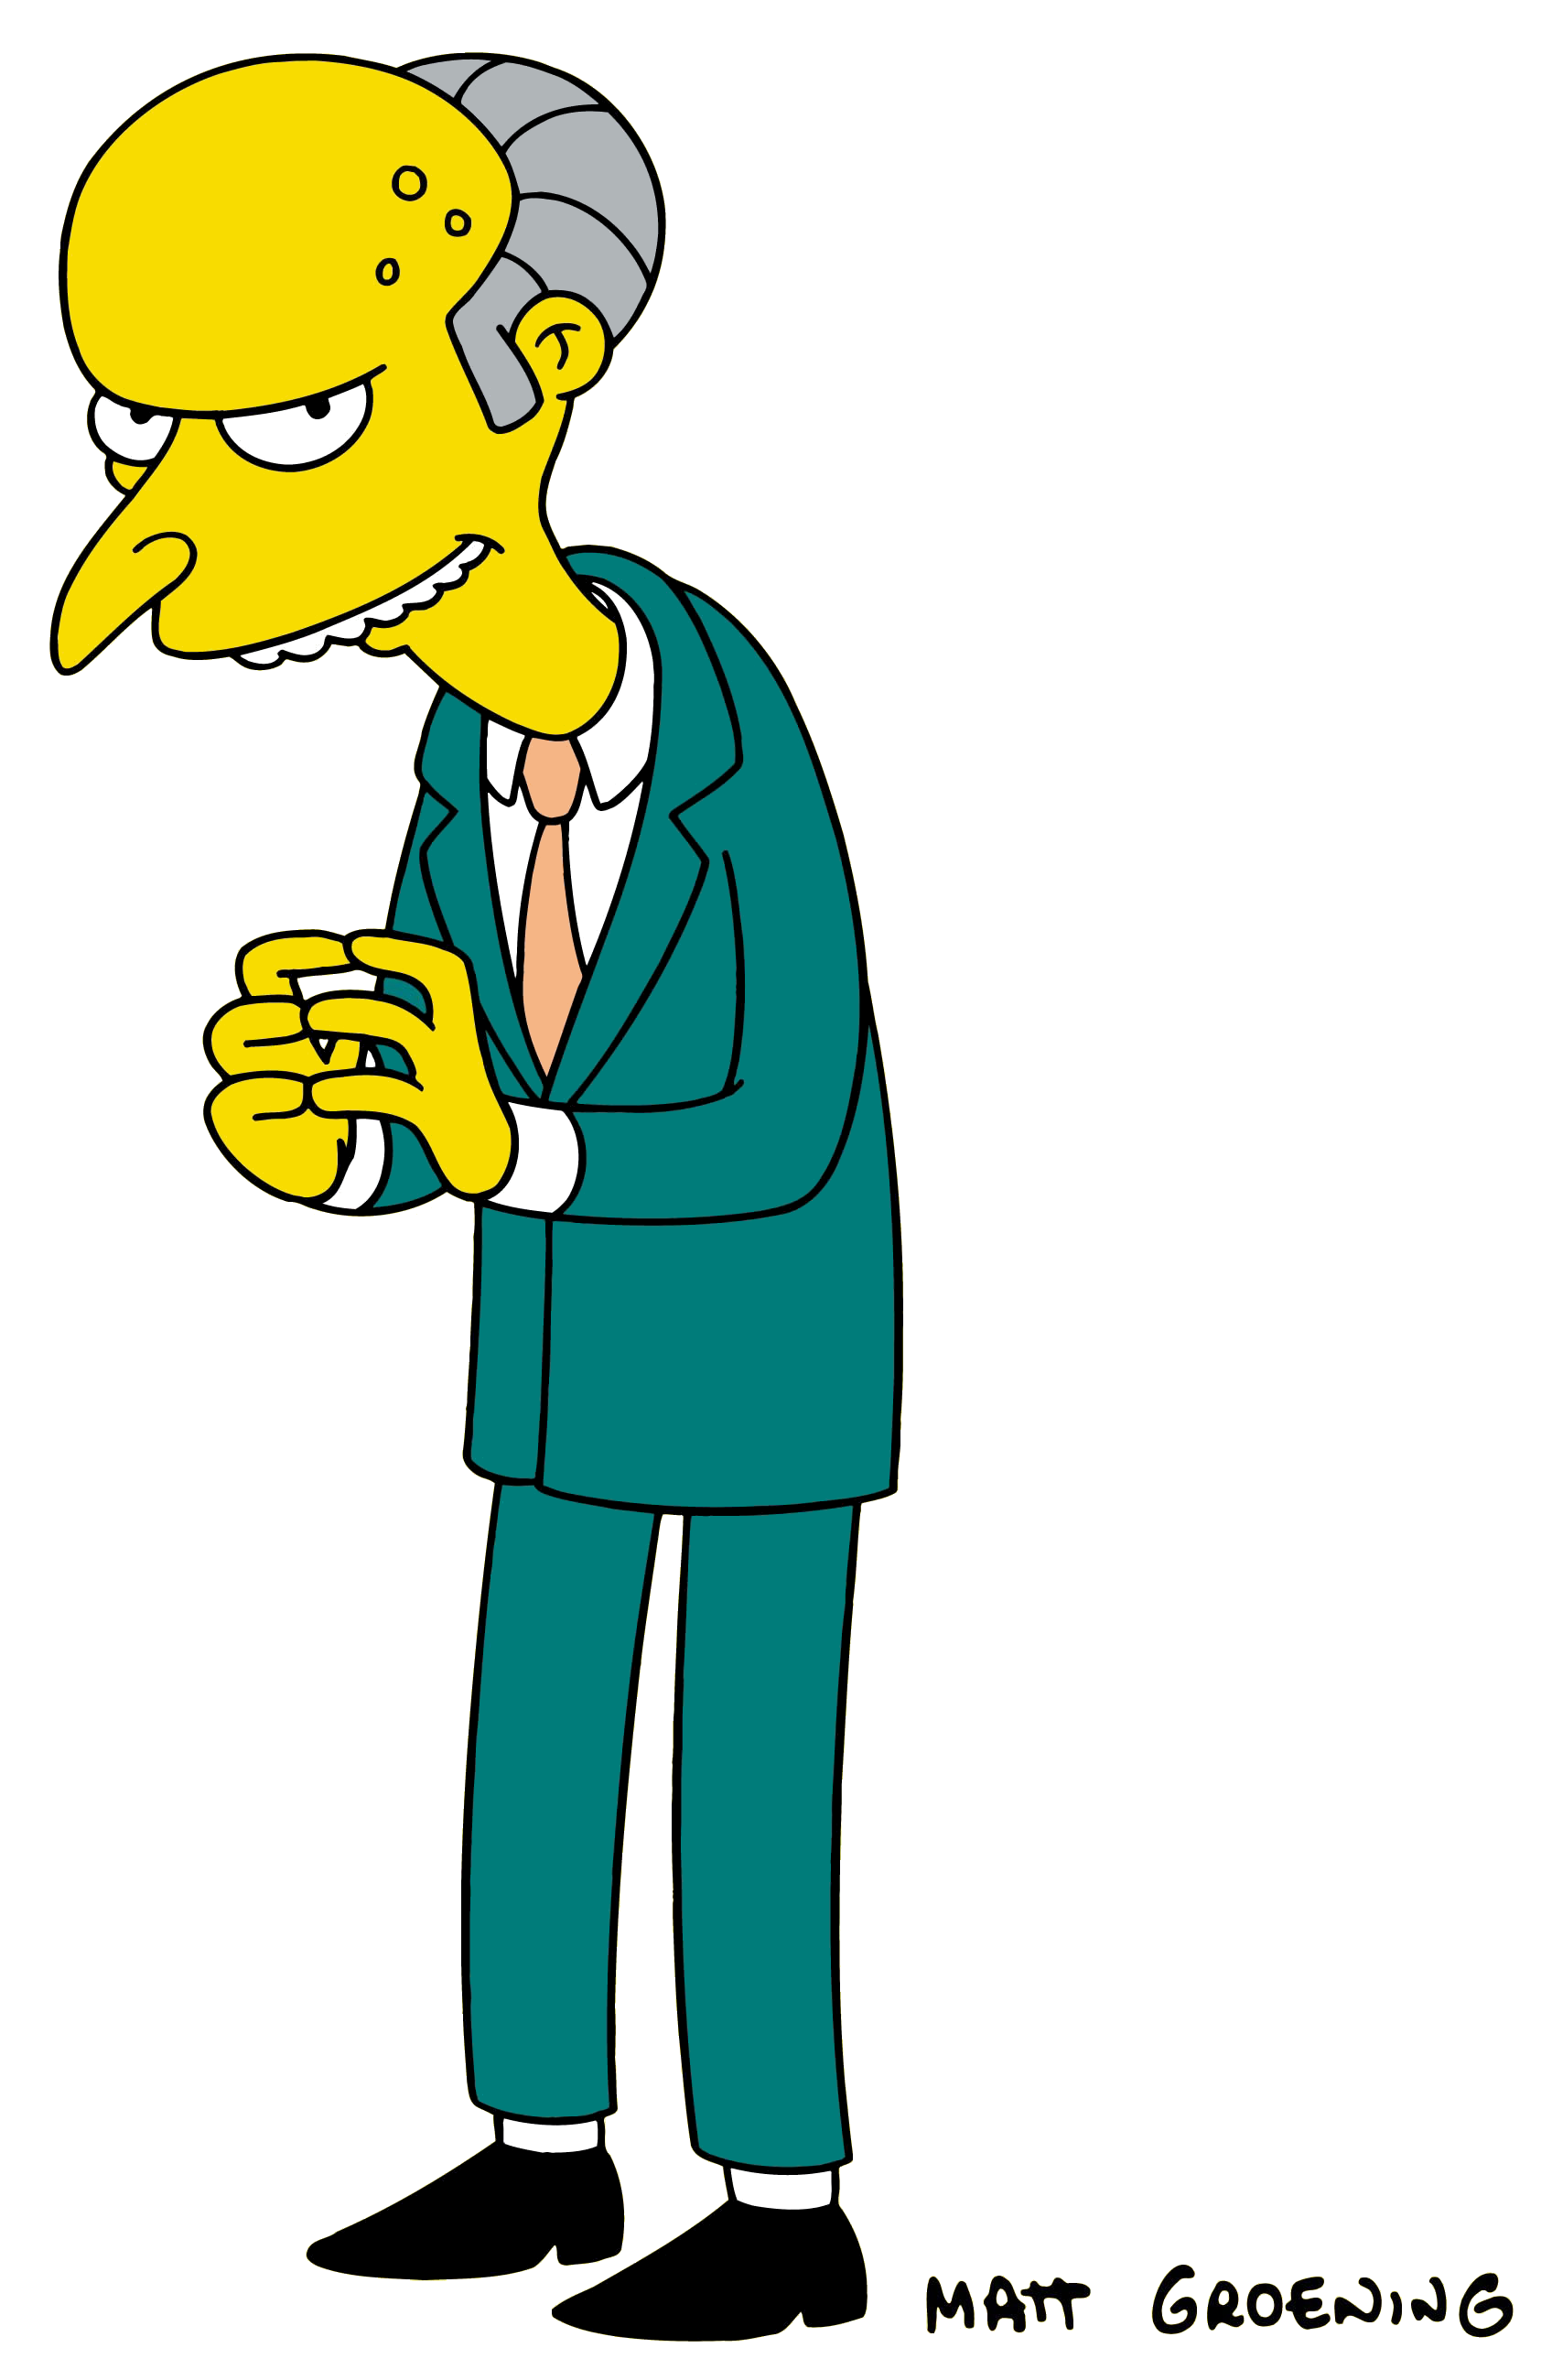 Charles Montgomery Burns Simpsons Wiki Fandom Powered Wikia